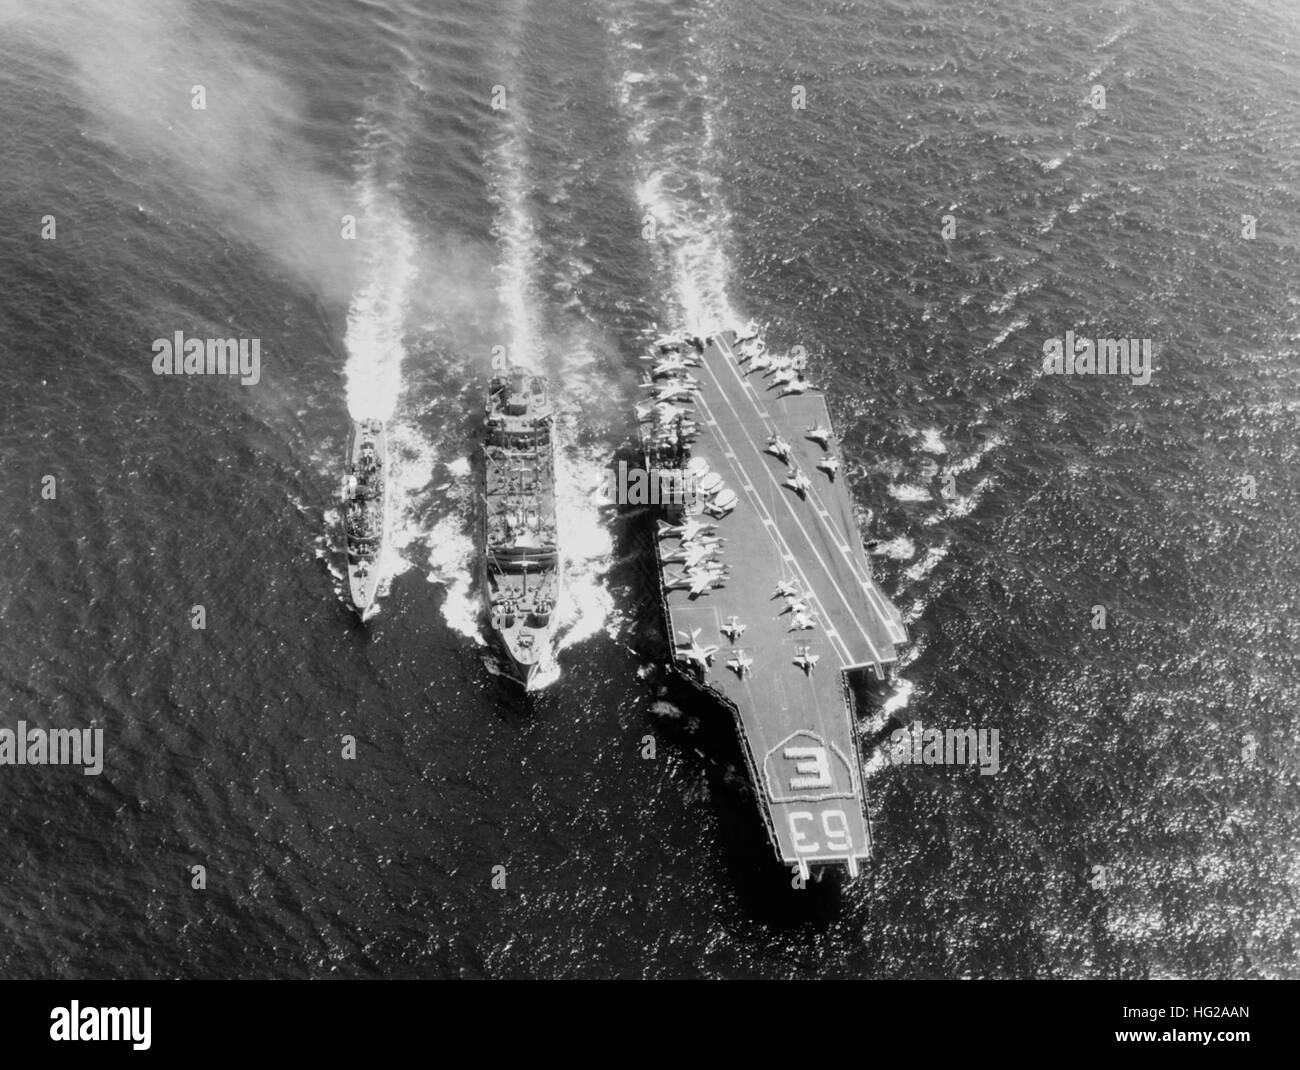 USS Kitty Hawk (CVA-63) and USS Turner Joy (DD-951) refueling from USS Kawishiwi (AO-146) on 23 April 1964 Stock Photo